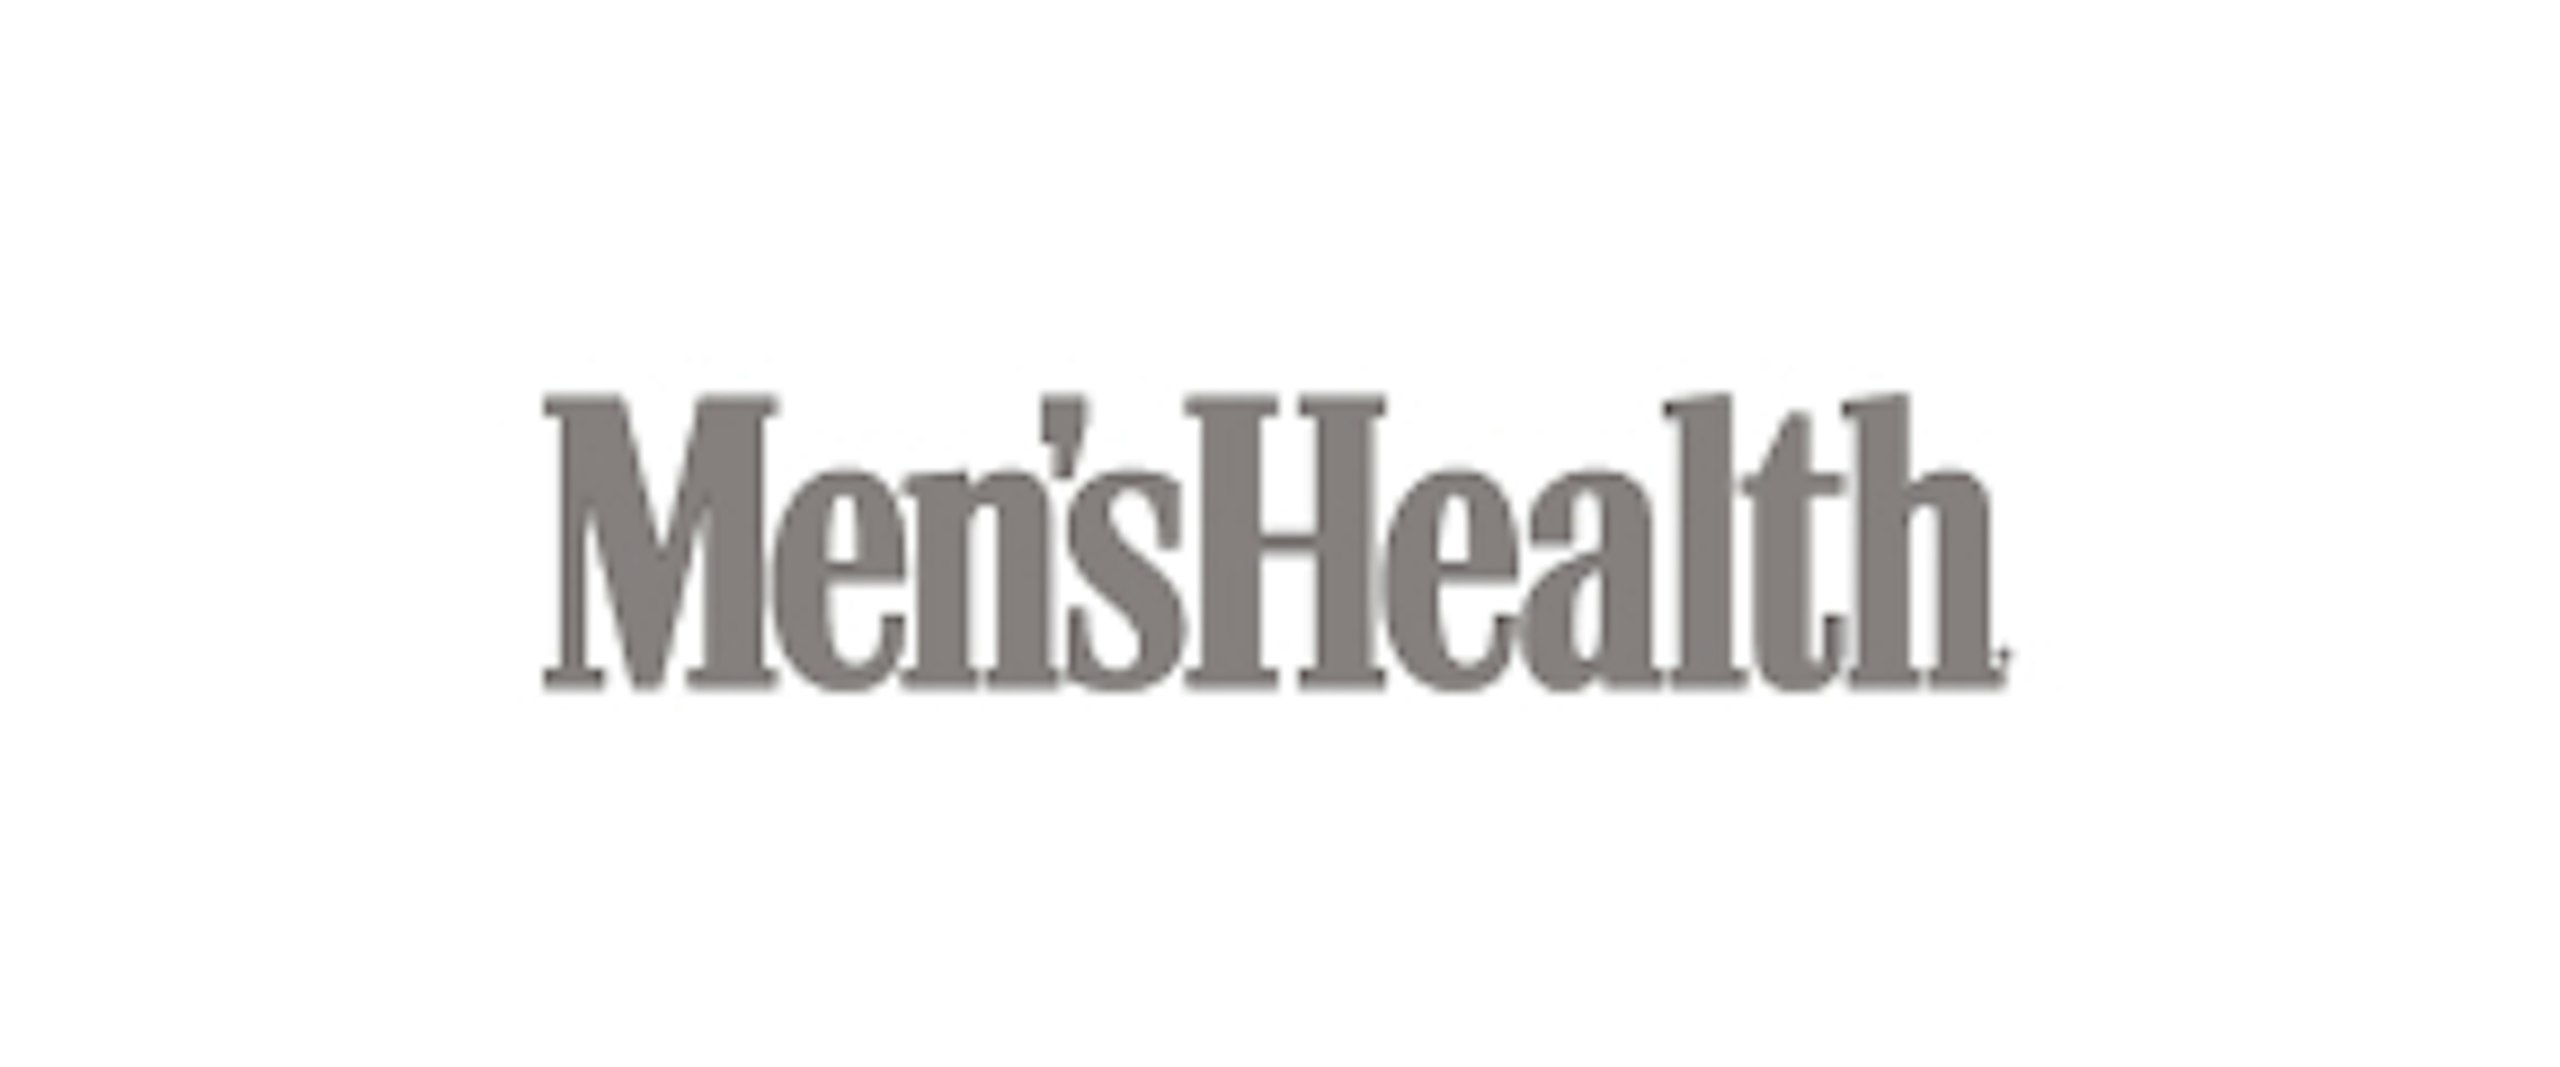 Mens Health Logo